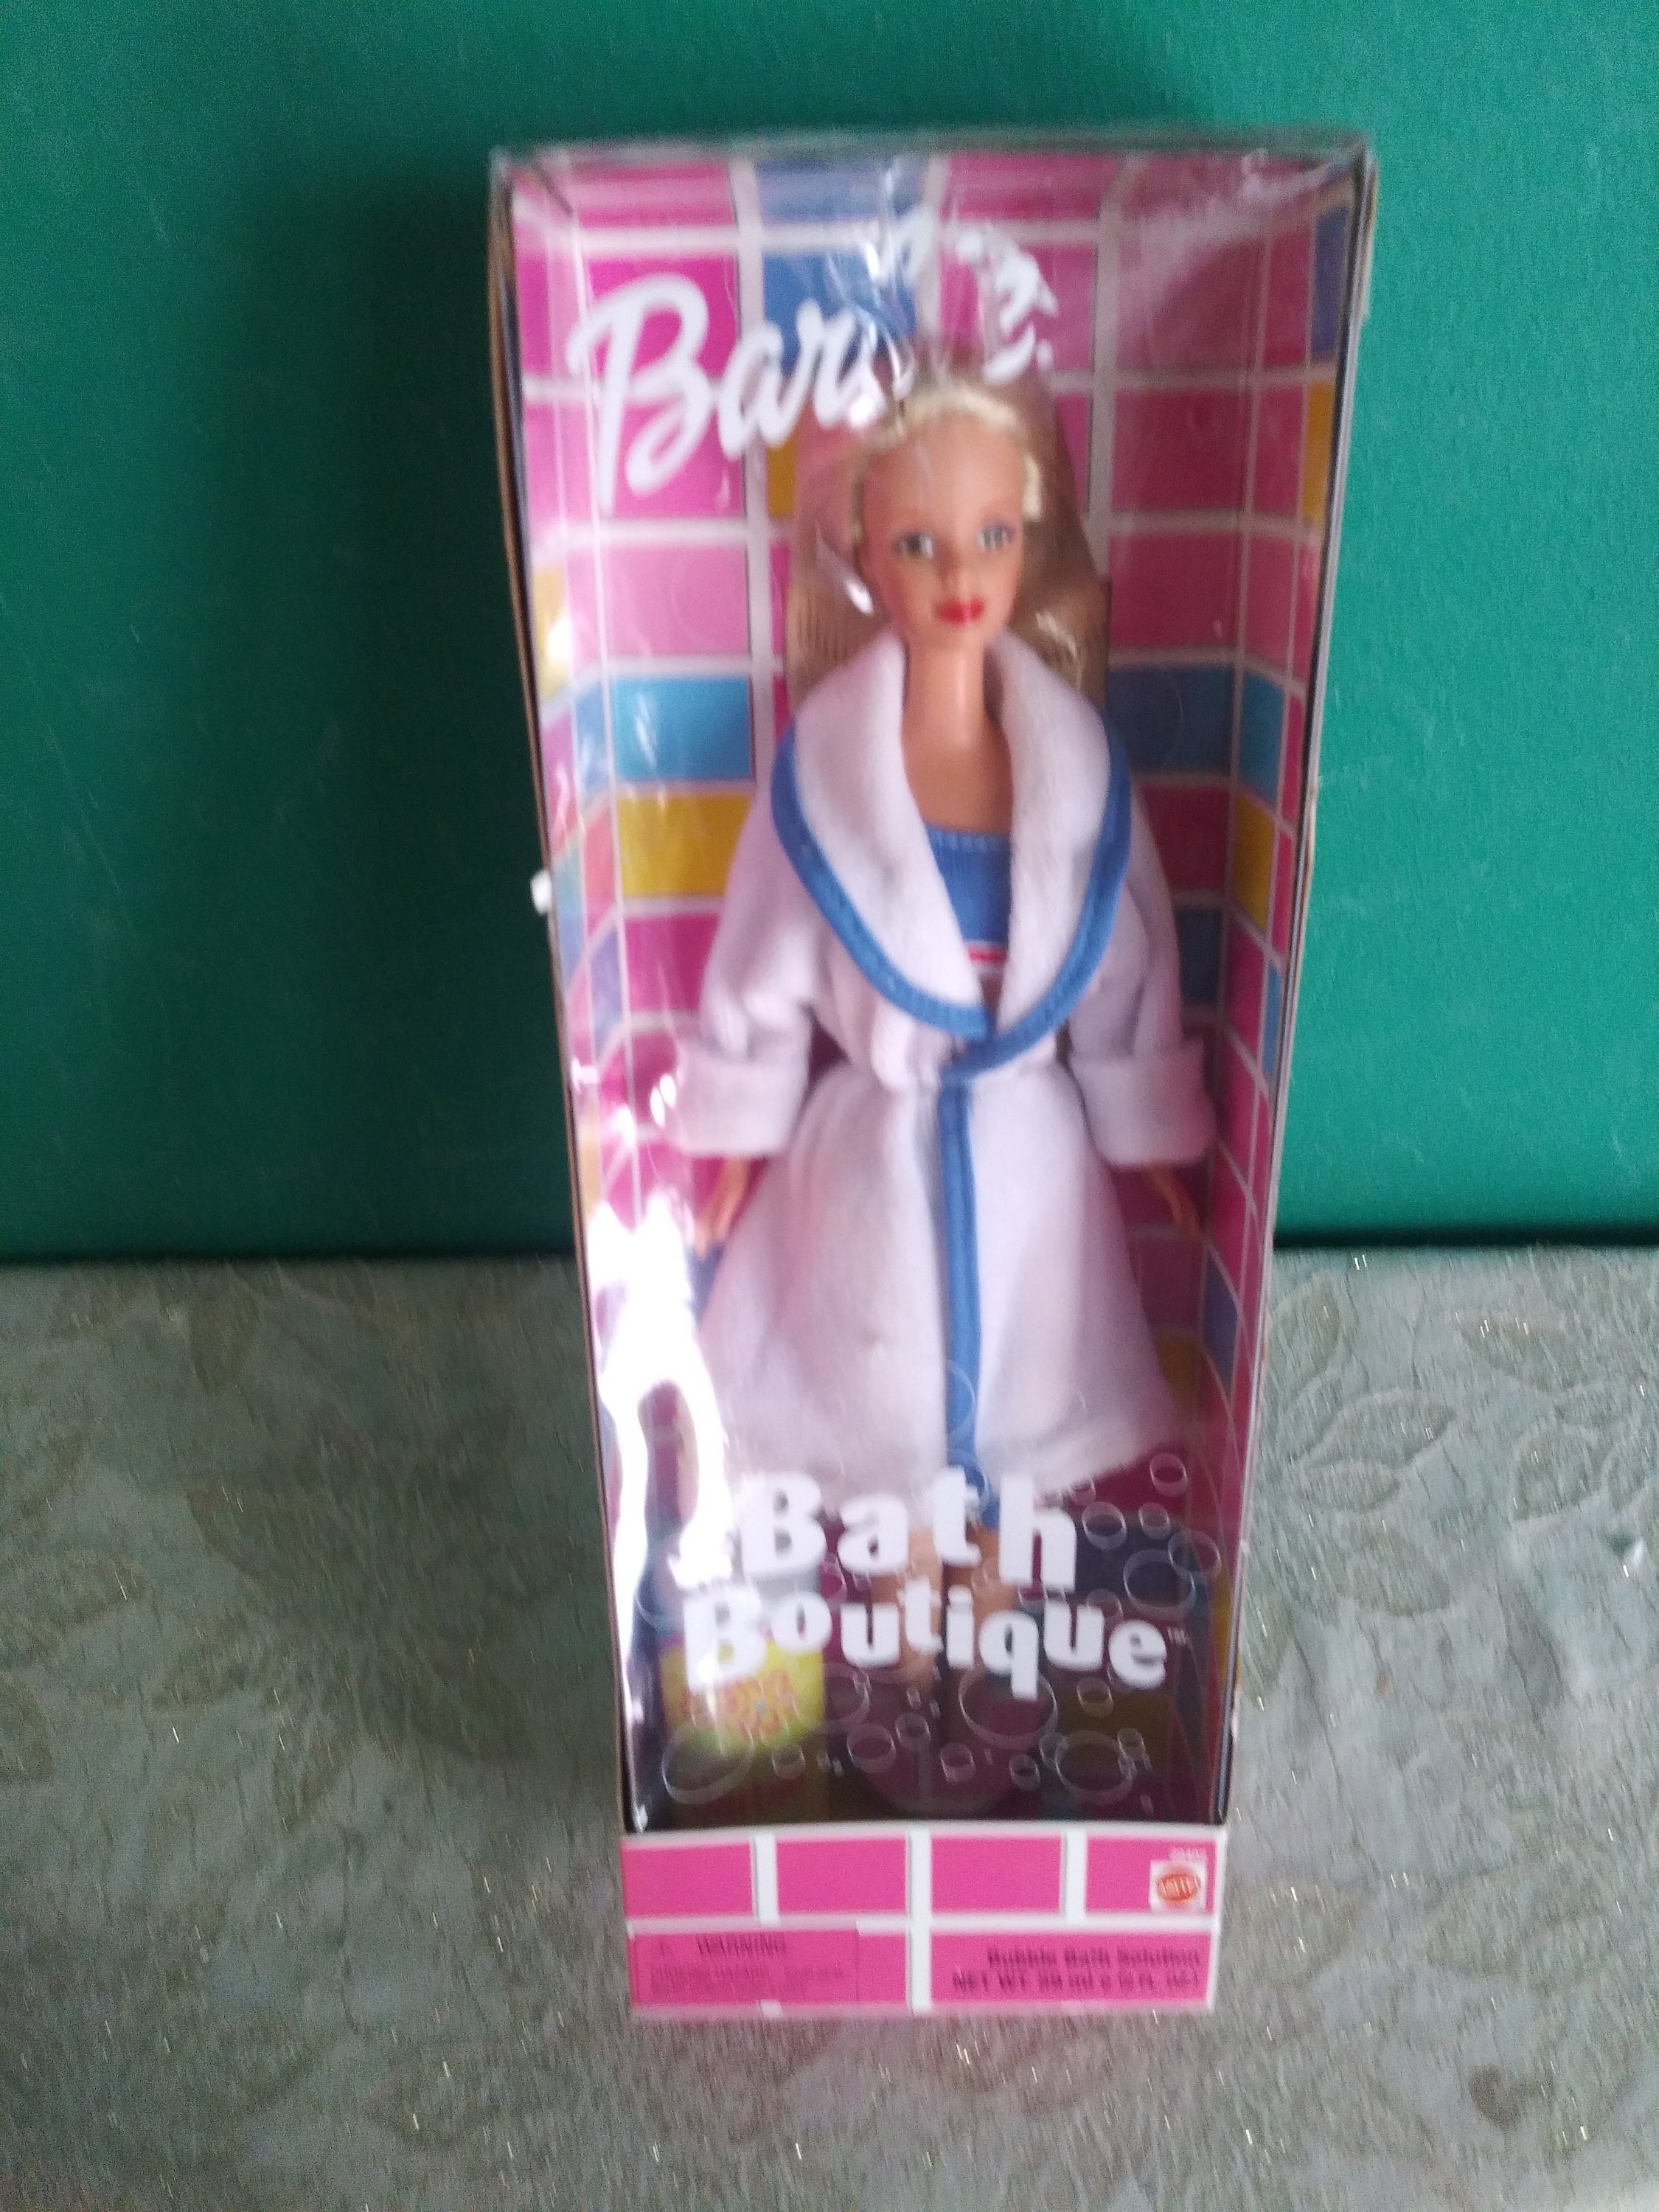 Phalanx Stevig Met name Mattel 1998 Bath Boutique Barbie Doll Vintage - Etsy Hong Kong